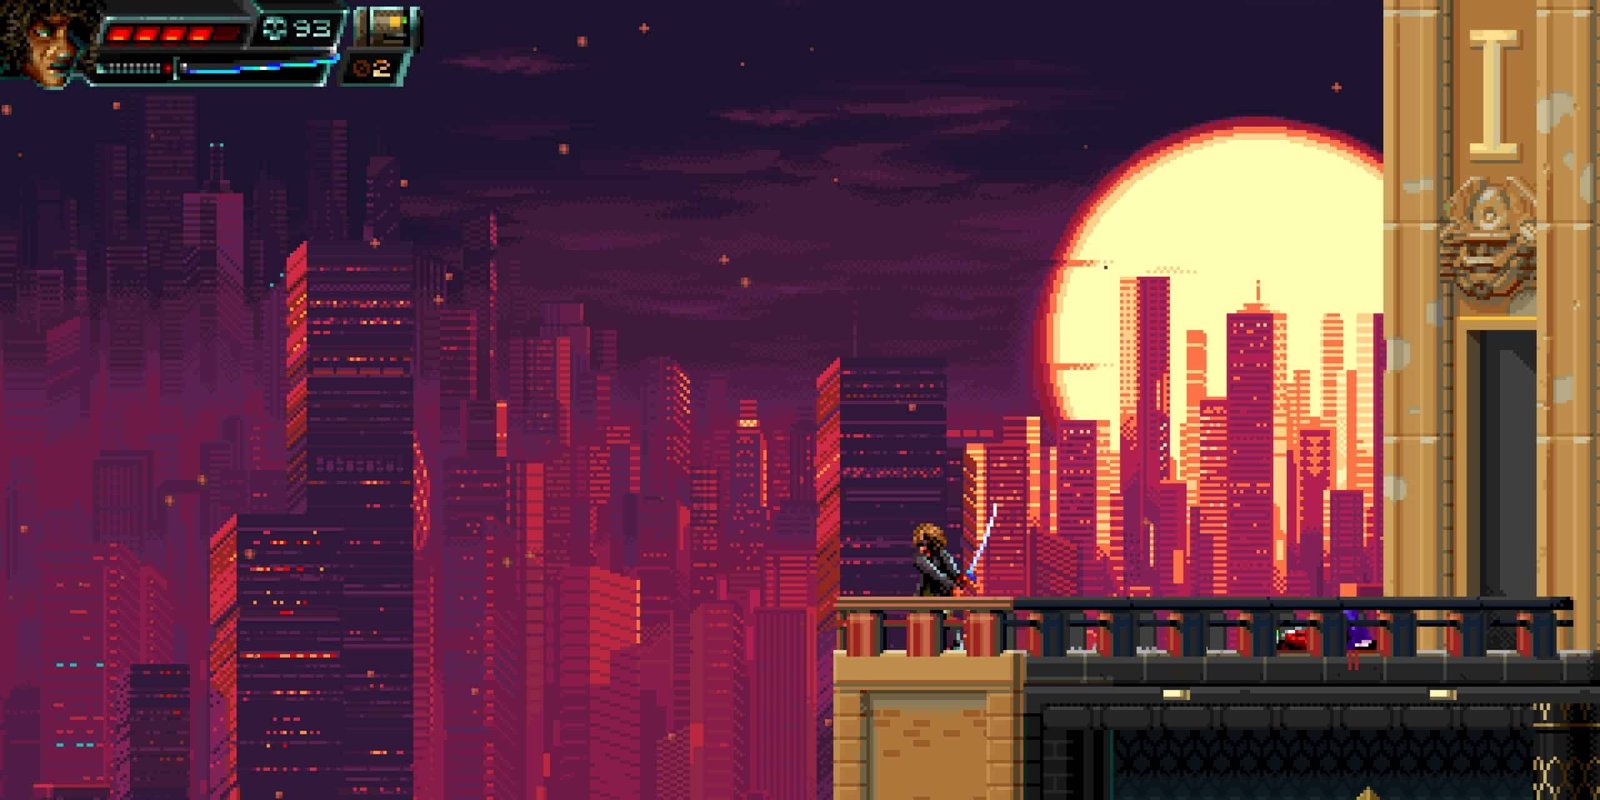 The bounty hunter admires the sun setting behind the city skyline